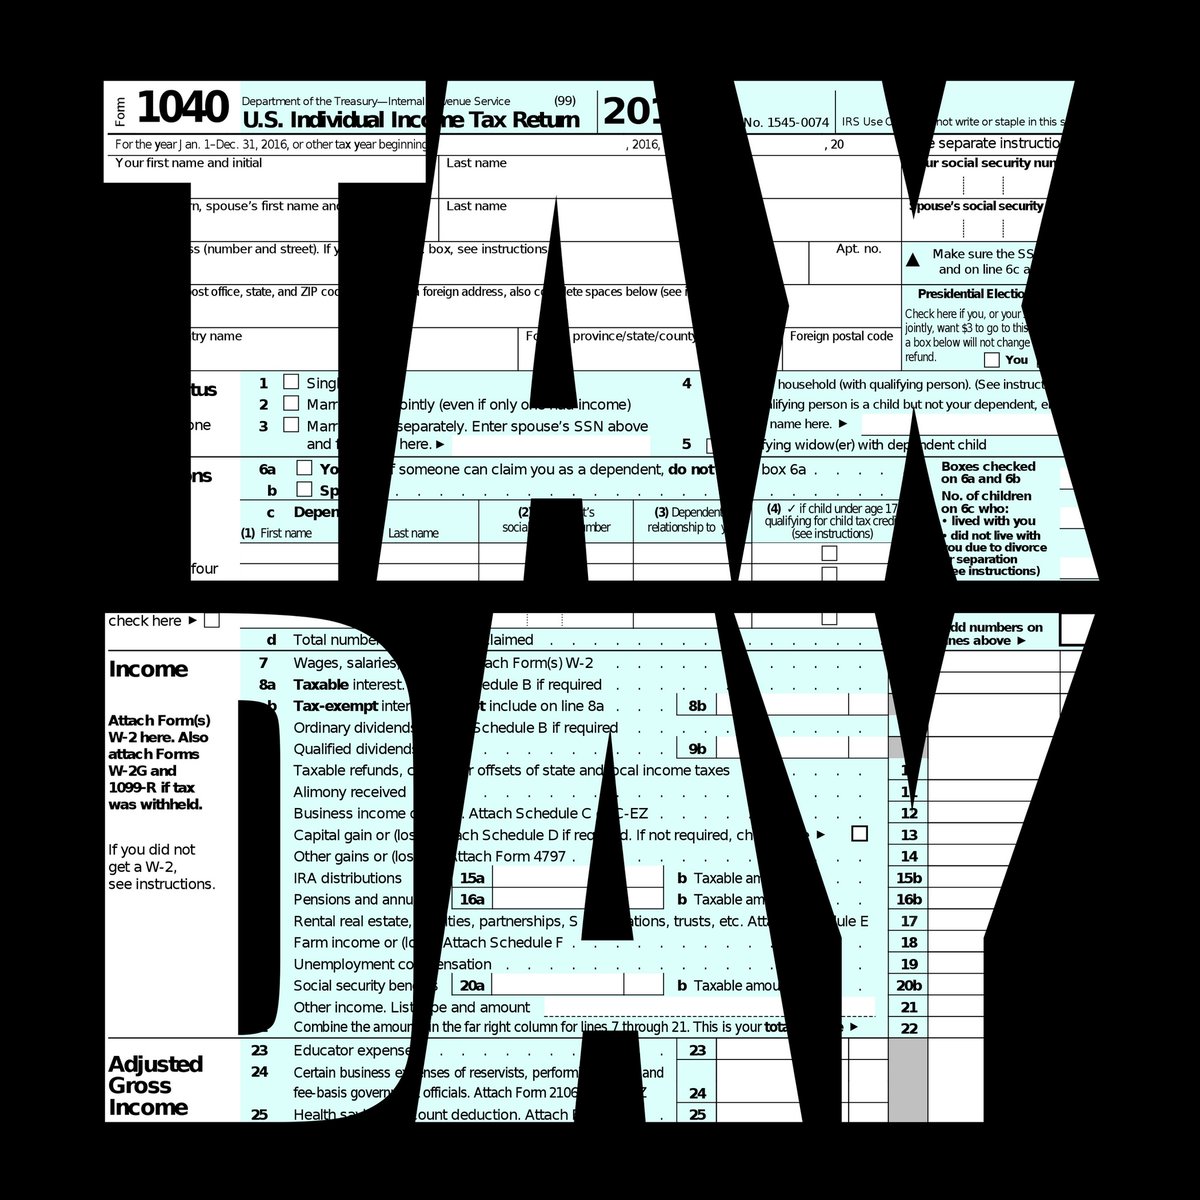 TAX DAY! MI Treasury provides last-minute tips before Individual Income Tax Deadline at midnight tonight (April 15): bit.ly/4aqnJ4t. #Taxes #MiGov